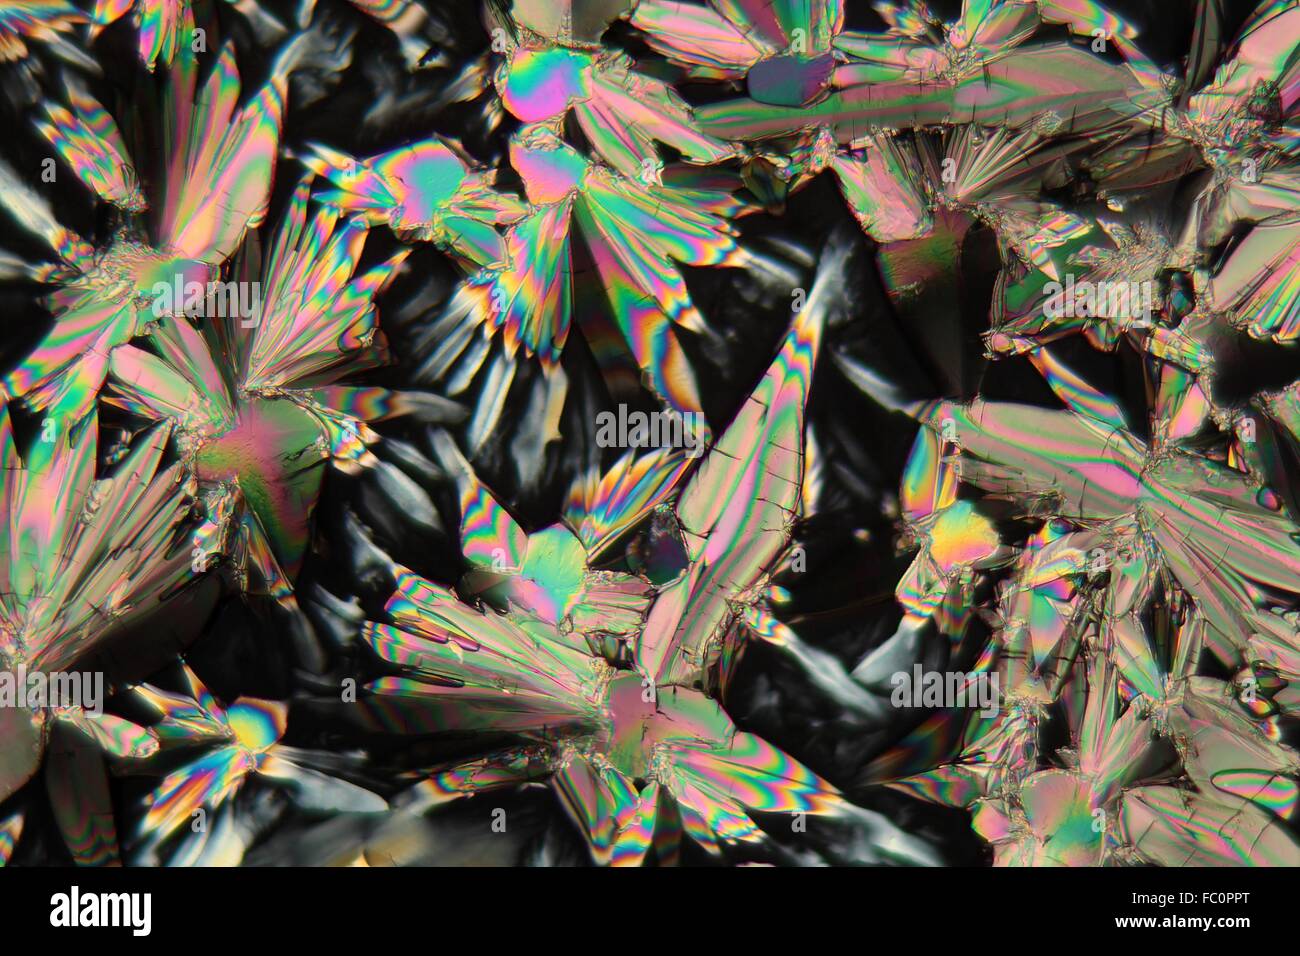 Apfels├ñure unter dem Mikroskop Stock Photo